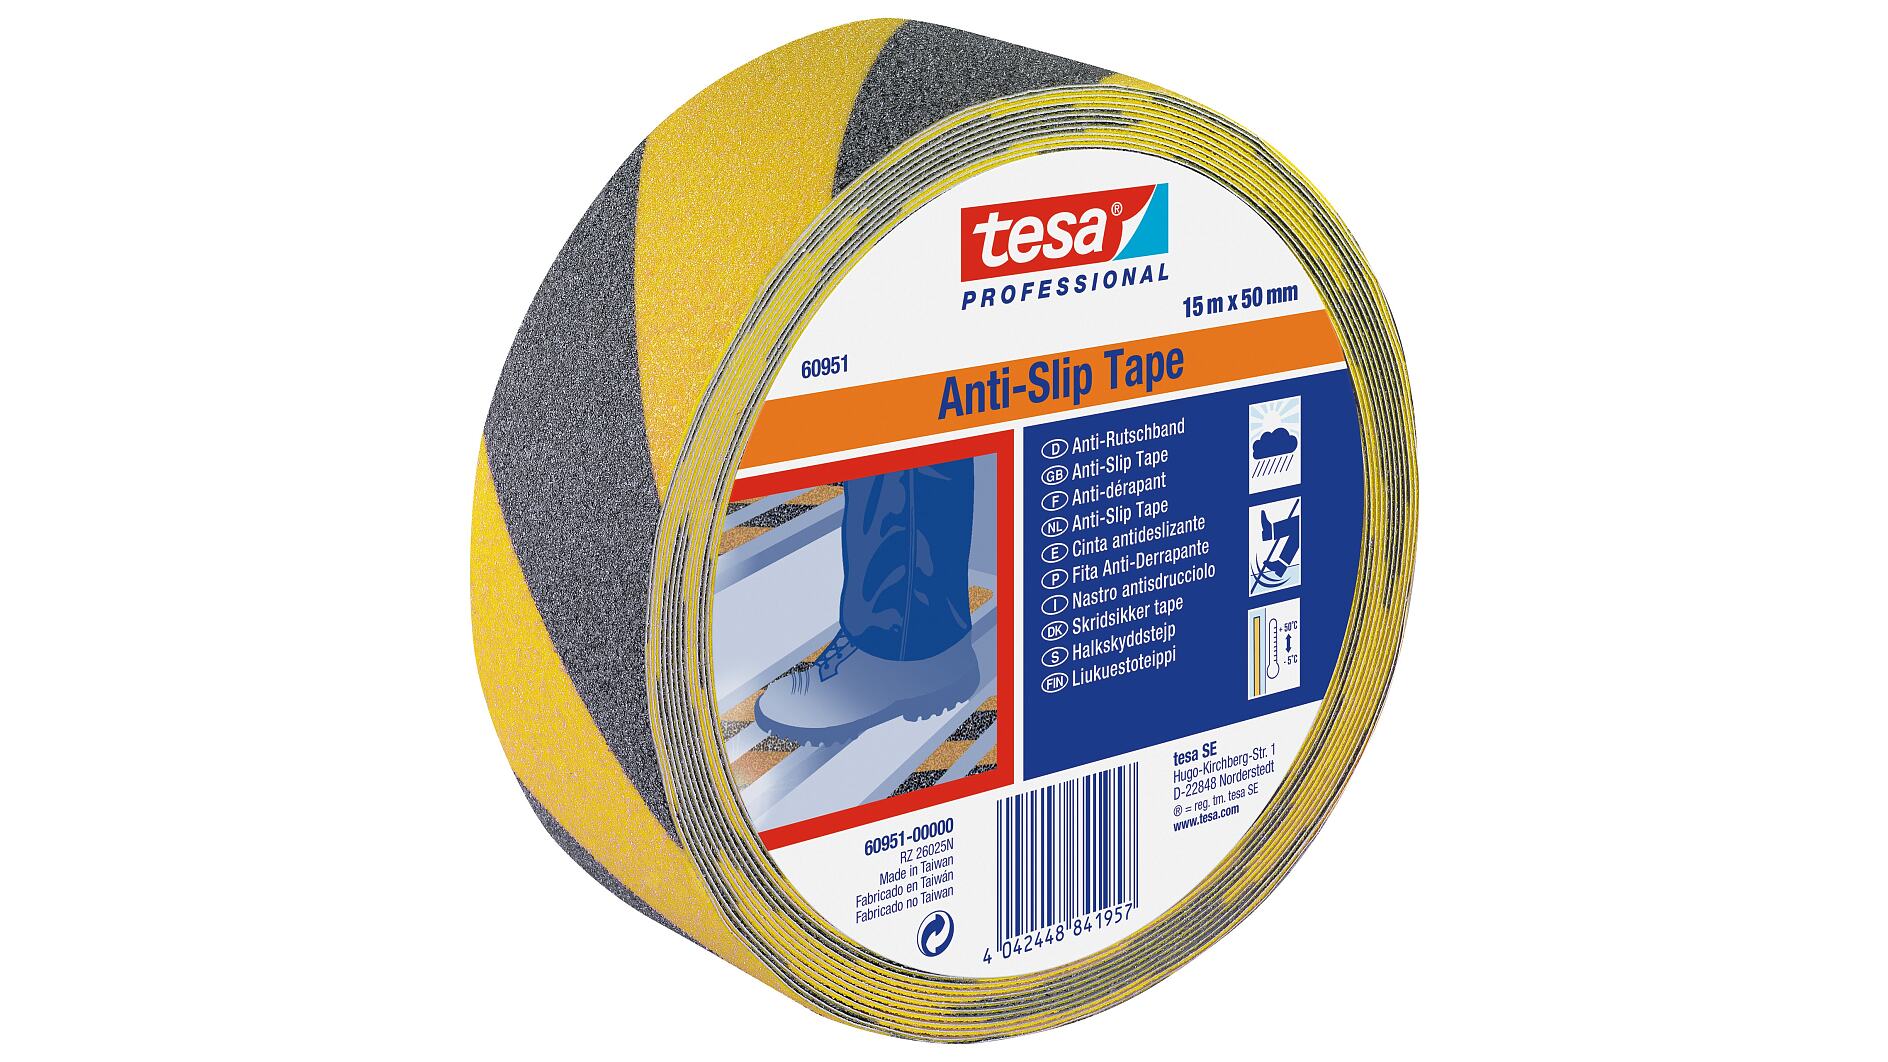 tesa® Professional 60951 Anti-slip Black/Yellow - tesa